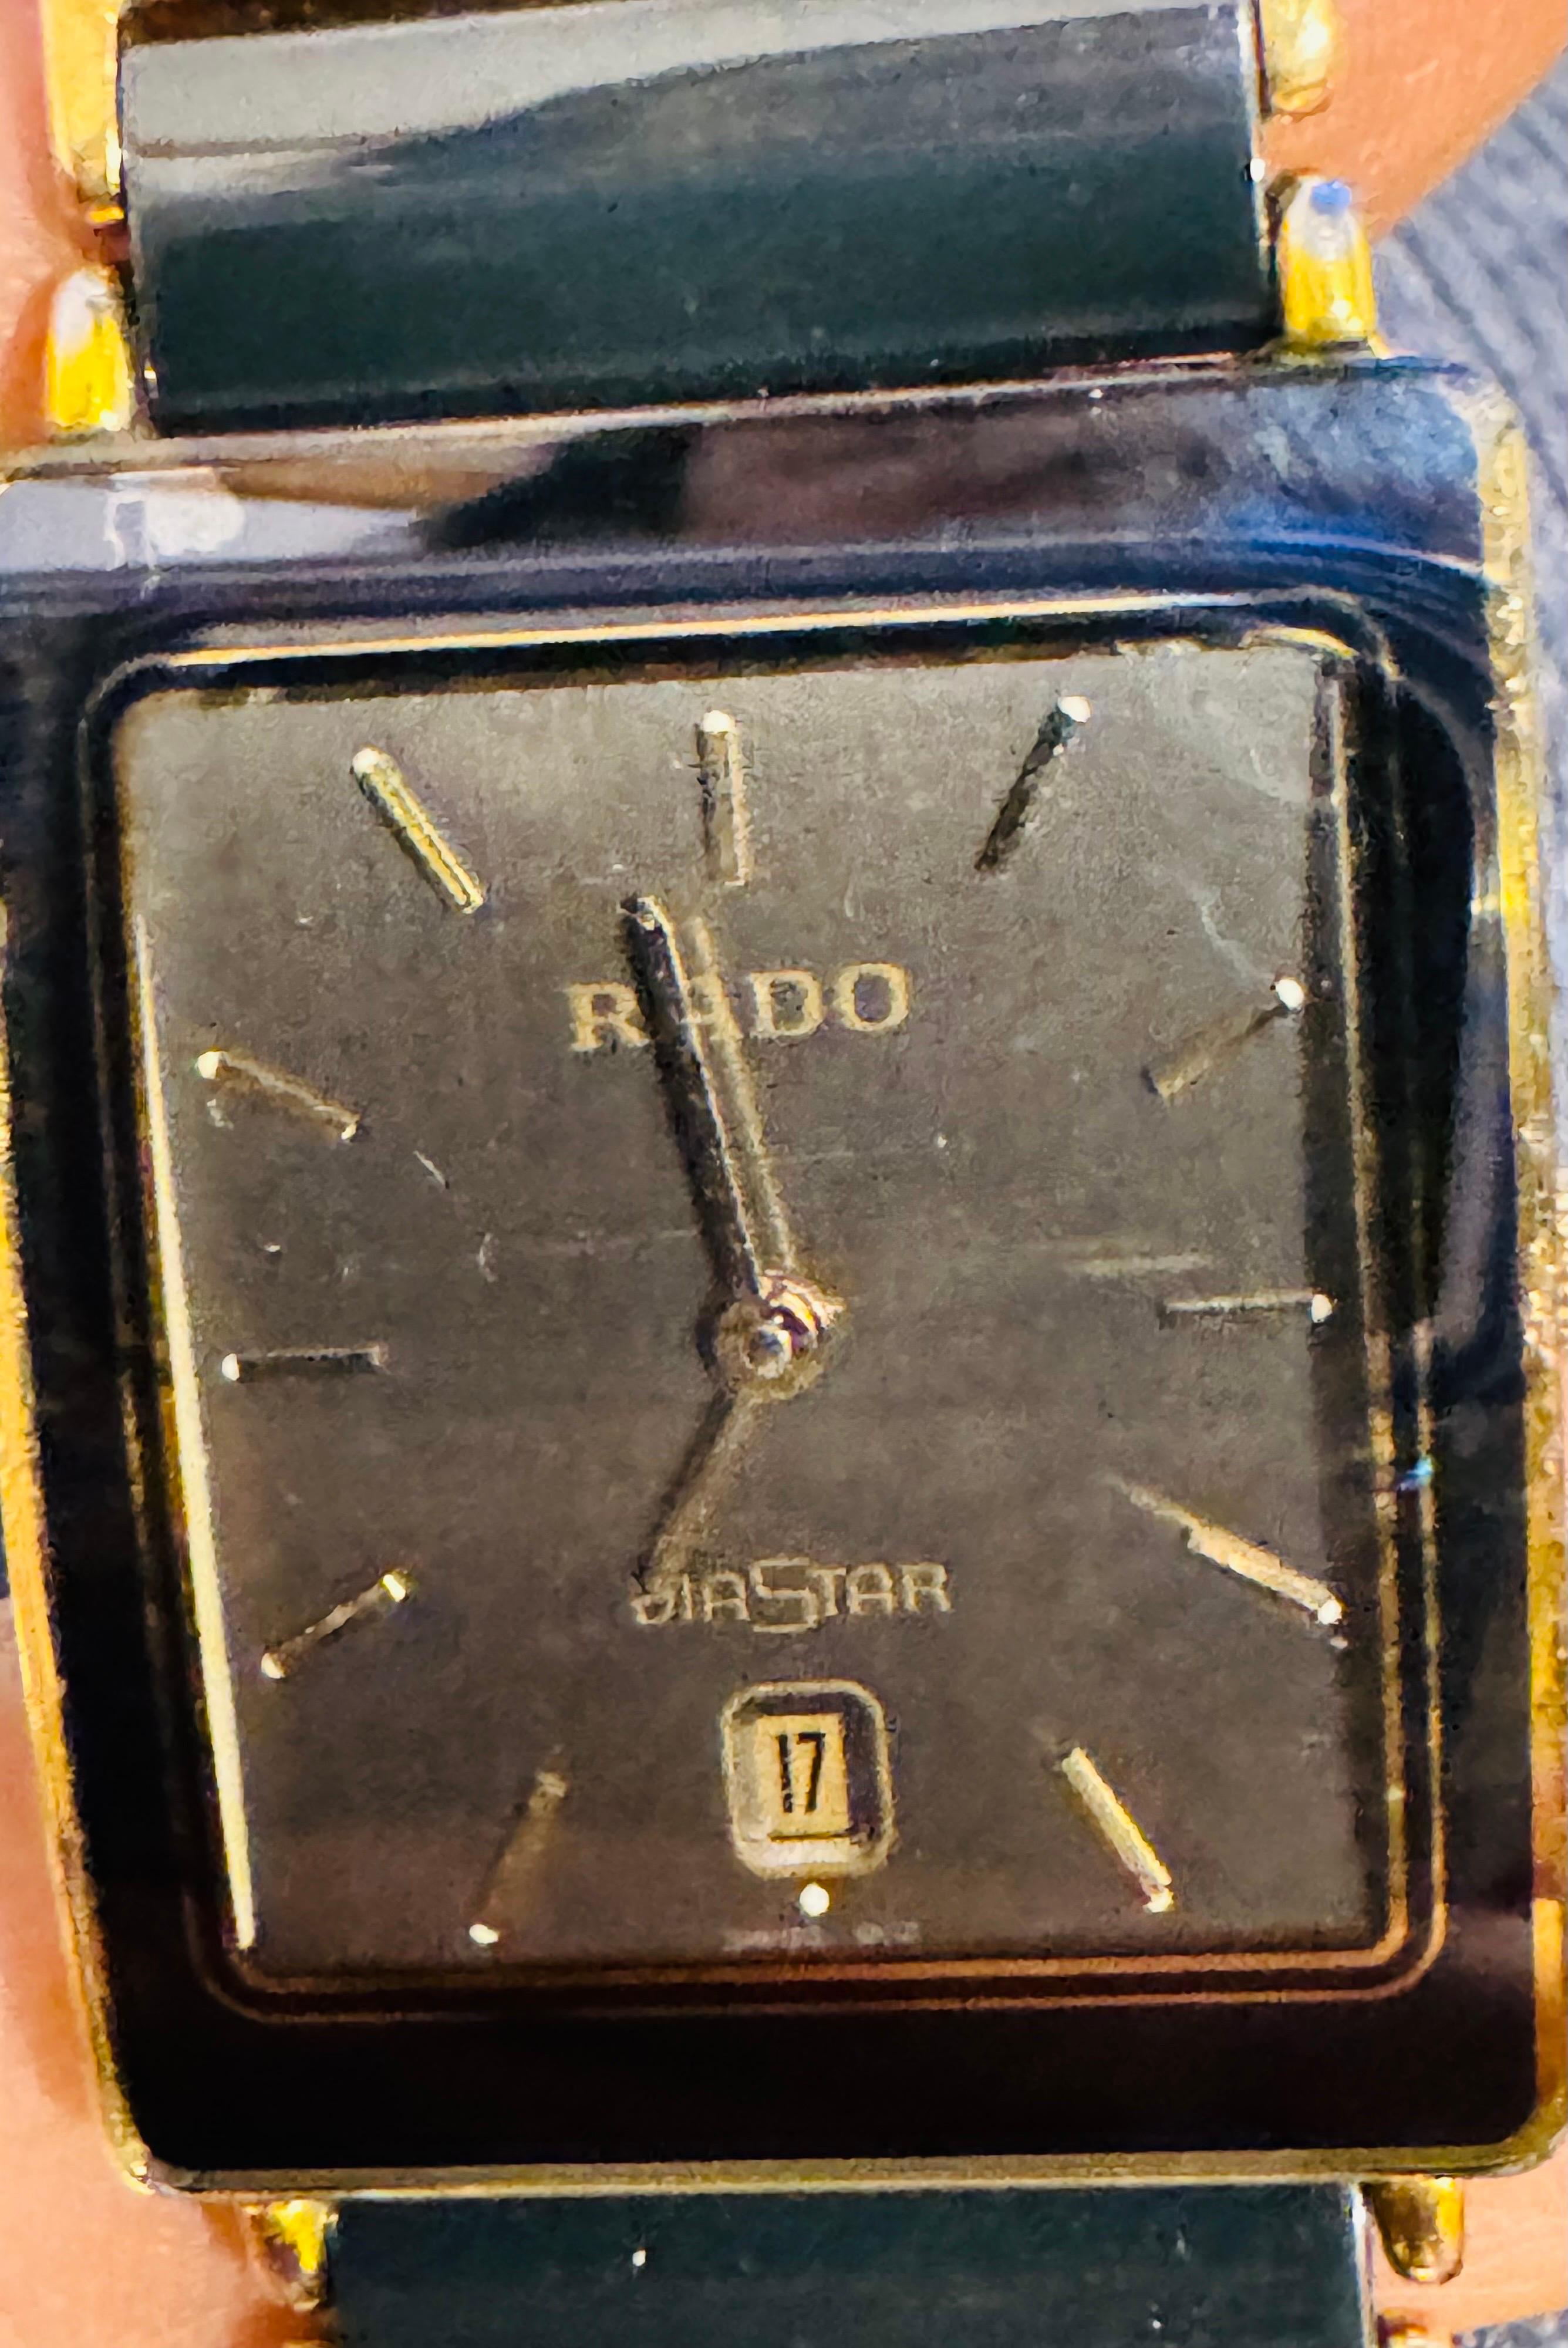 Men's Rado DIRSTAR S bracelet watch - scratch proof, water sealed, high tech ceramics. For Sale